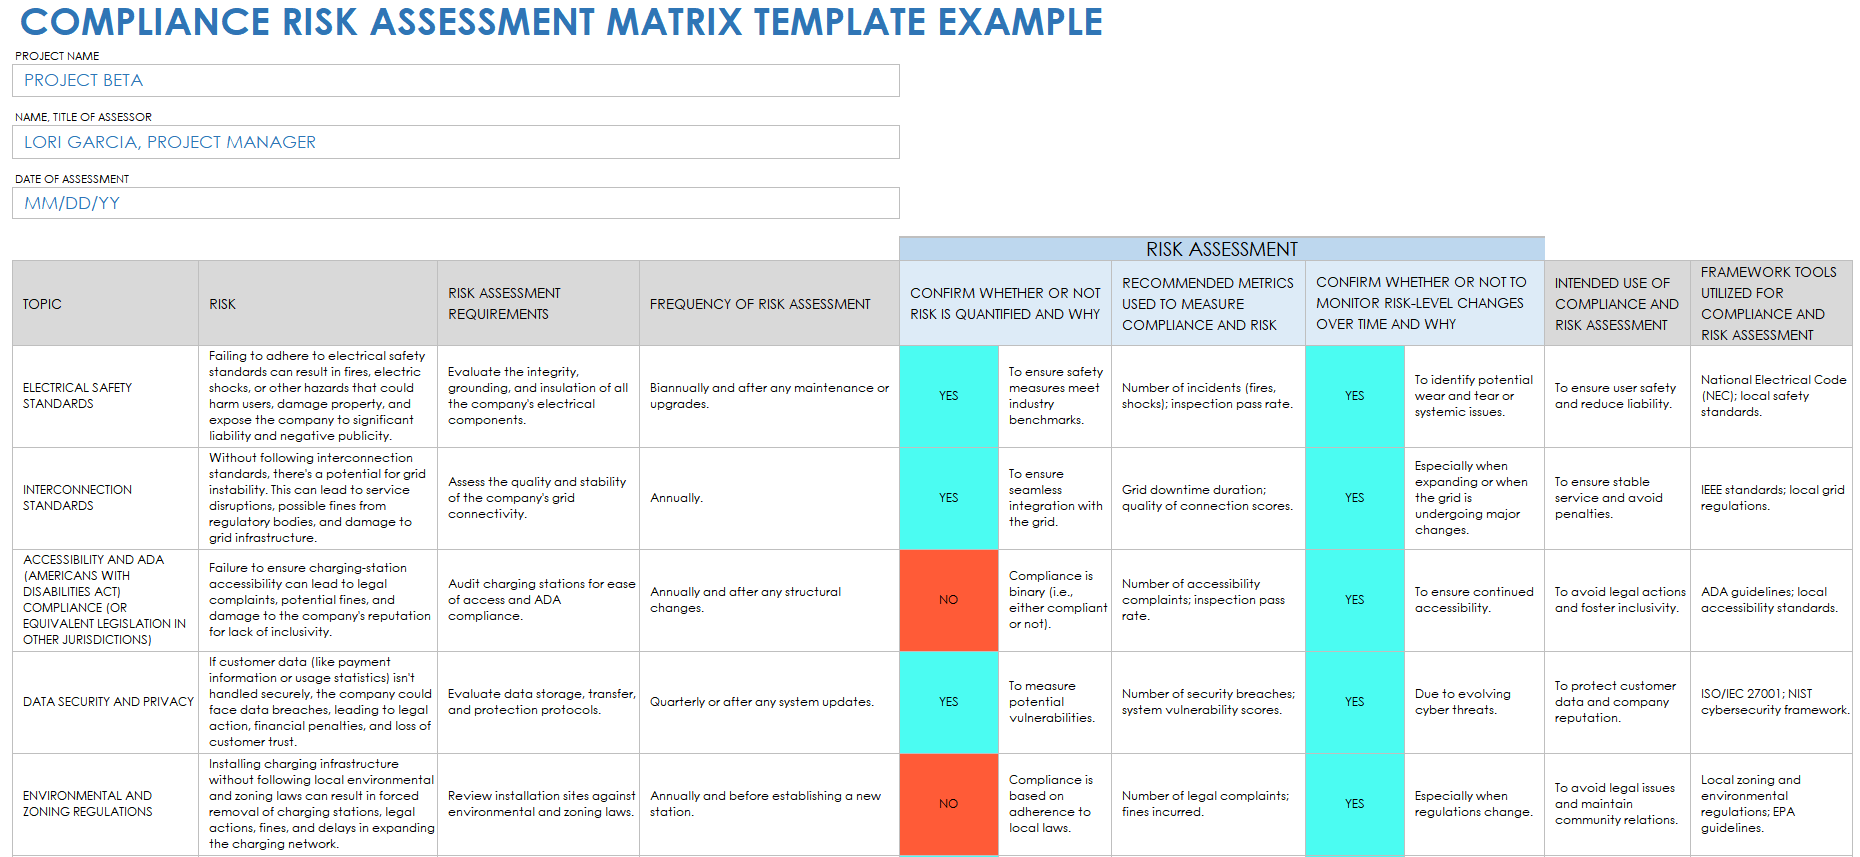 Compliance Risk Assessment Matrix Example Template